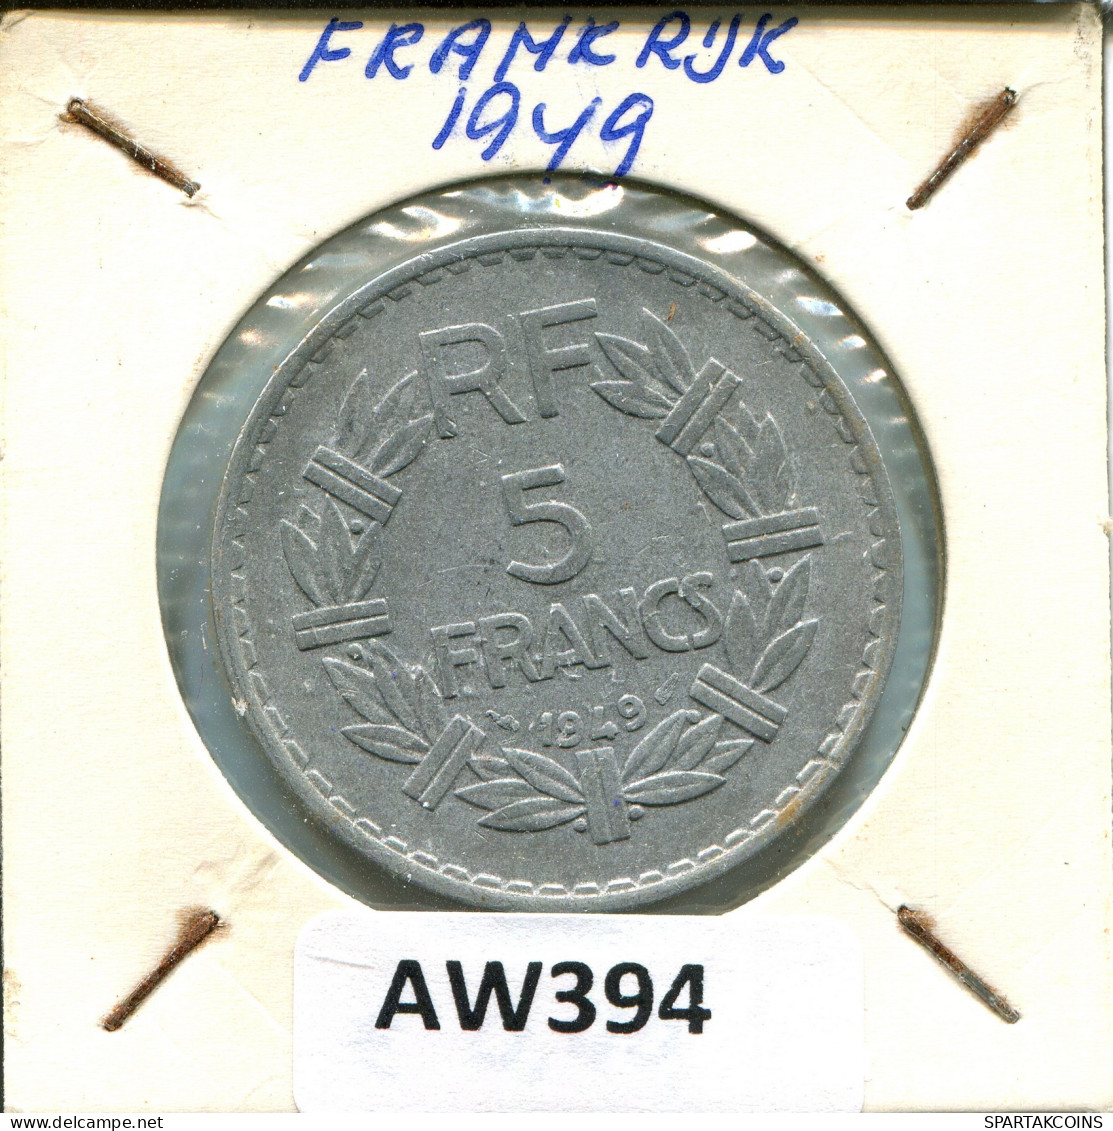 5 FRANCS 1949 FRANCE Coin #AW394 - 5 Francs